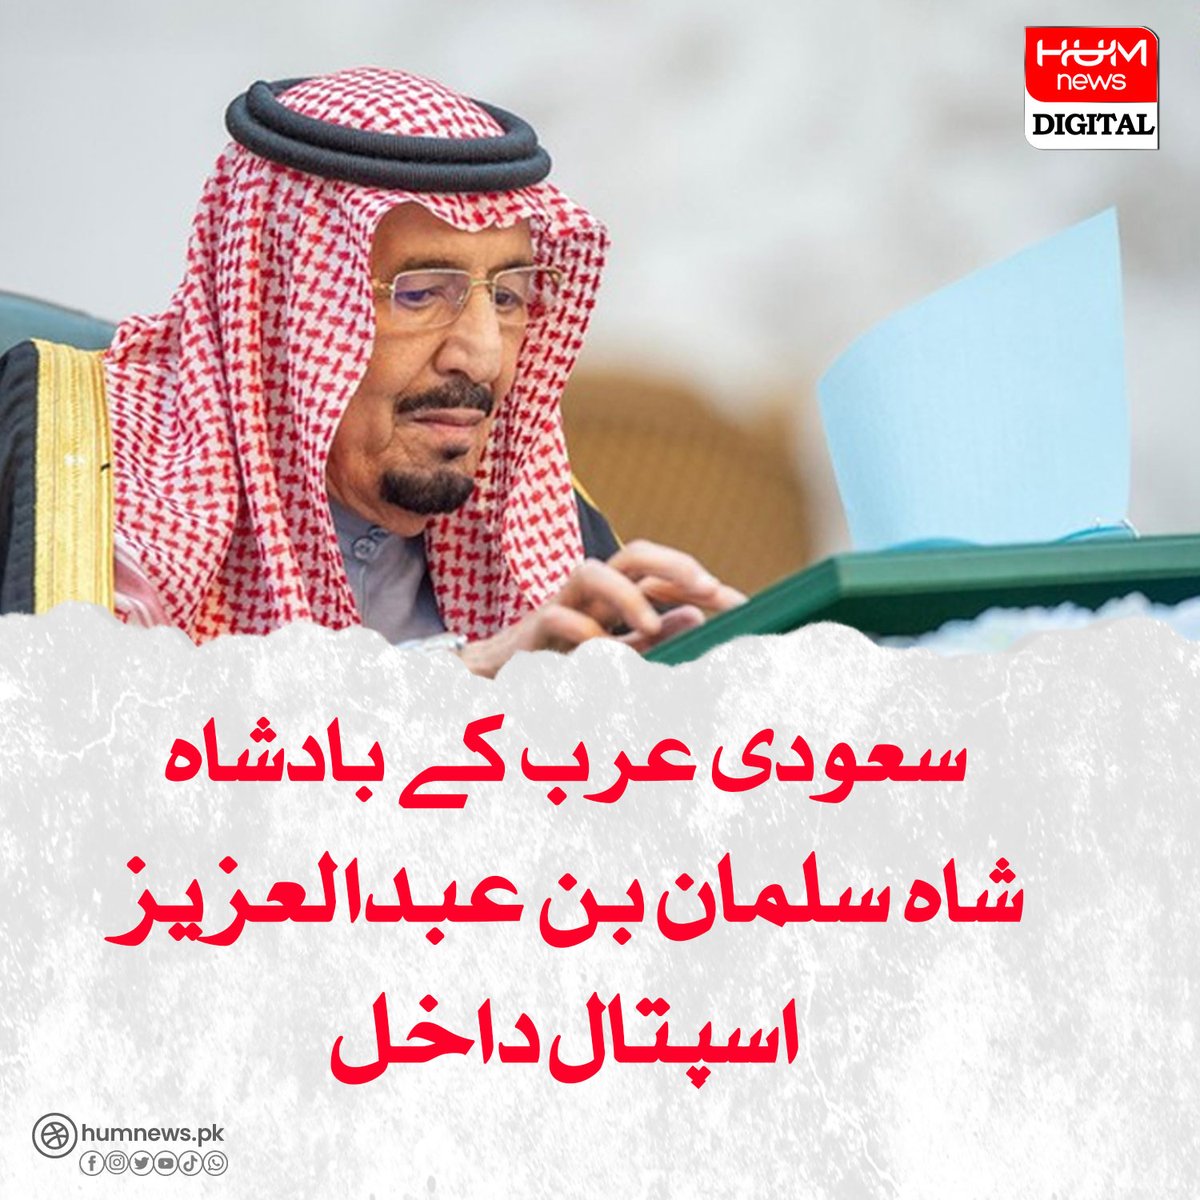 سعودی عرب کے بادشاہ شاہ سلمان بن عبدالعزیز اسپتال داخل
humnews.pk/latest/480010/